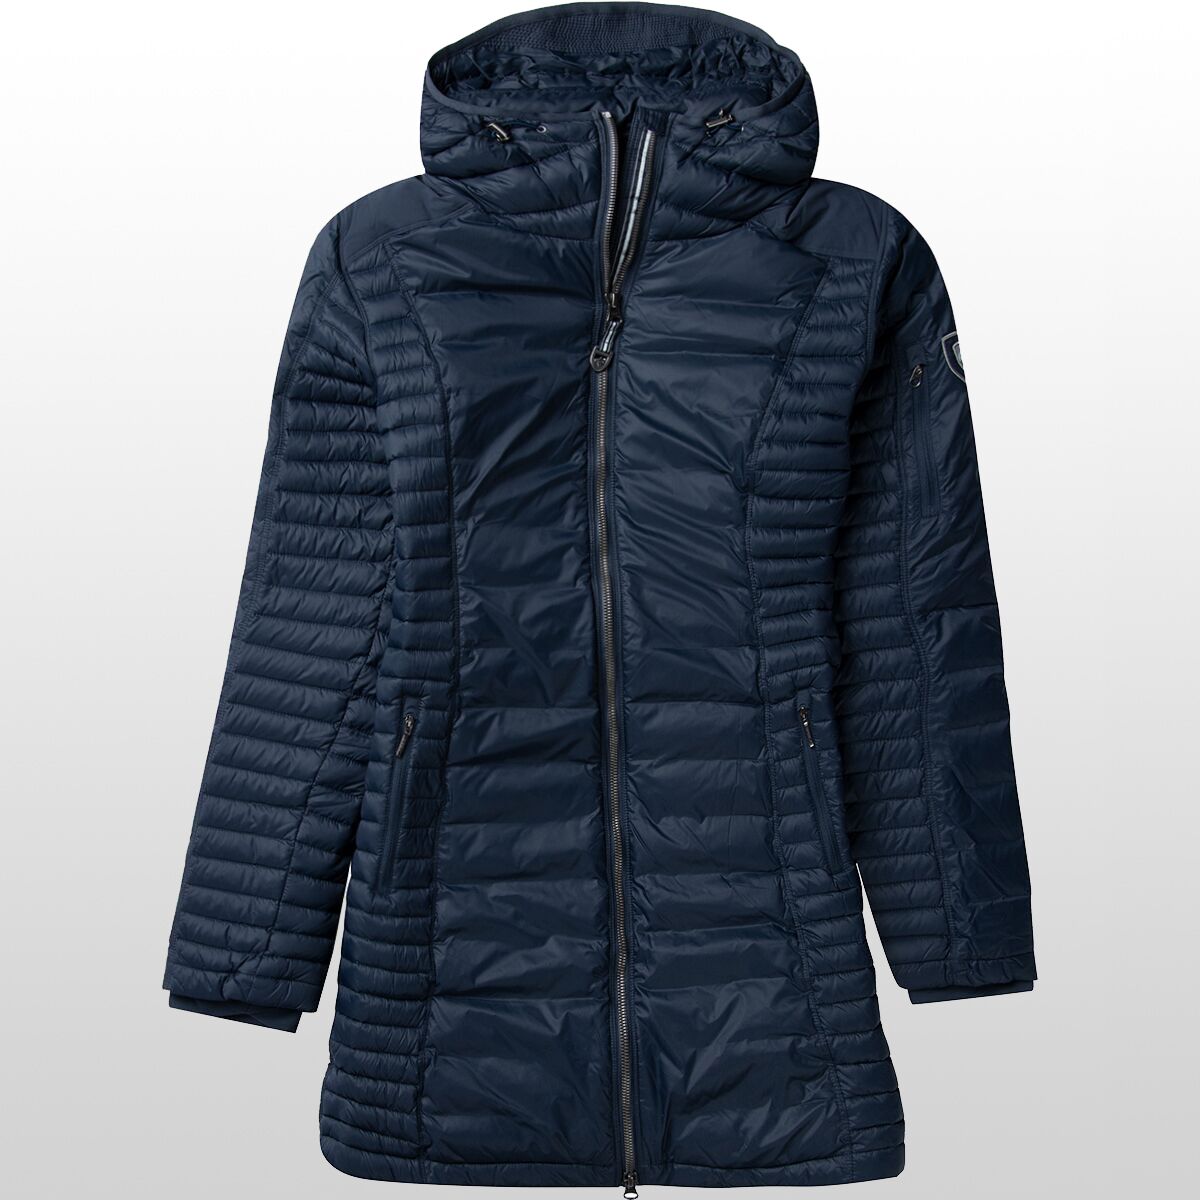 Kuhl, Jackets & Coats, Kuhl Womens Spyfire Parka Light Grey Goose Down  Puffer Coat Size Large